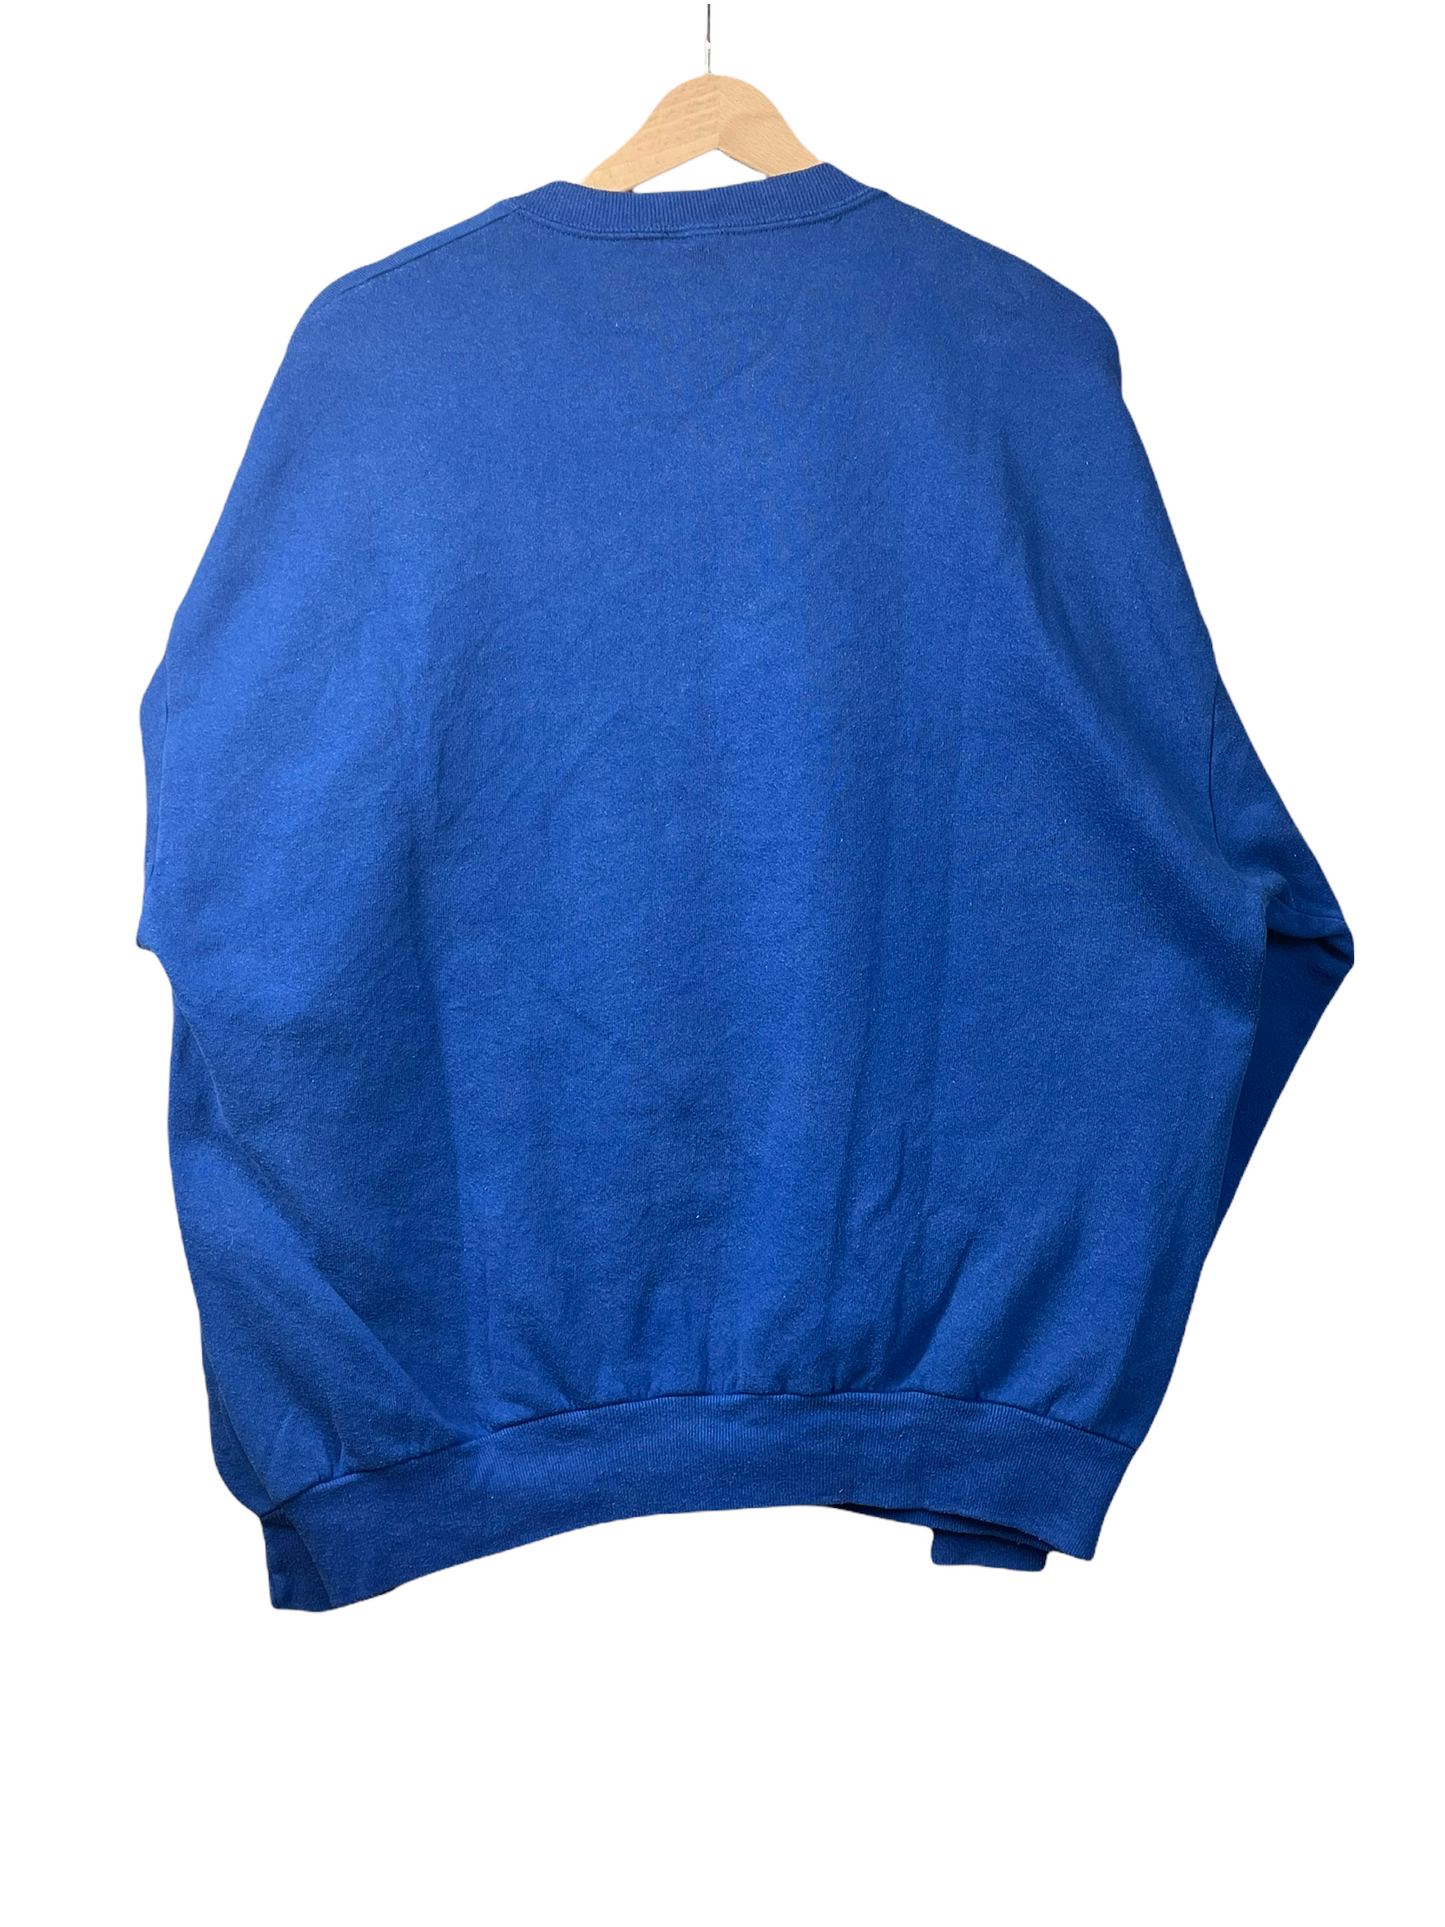 90s Jerzees Christmas Sweatshirt blue